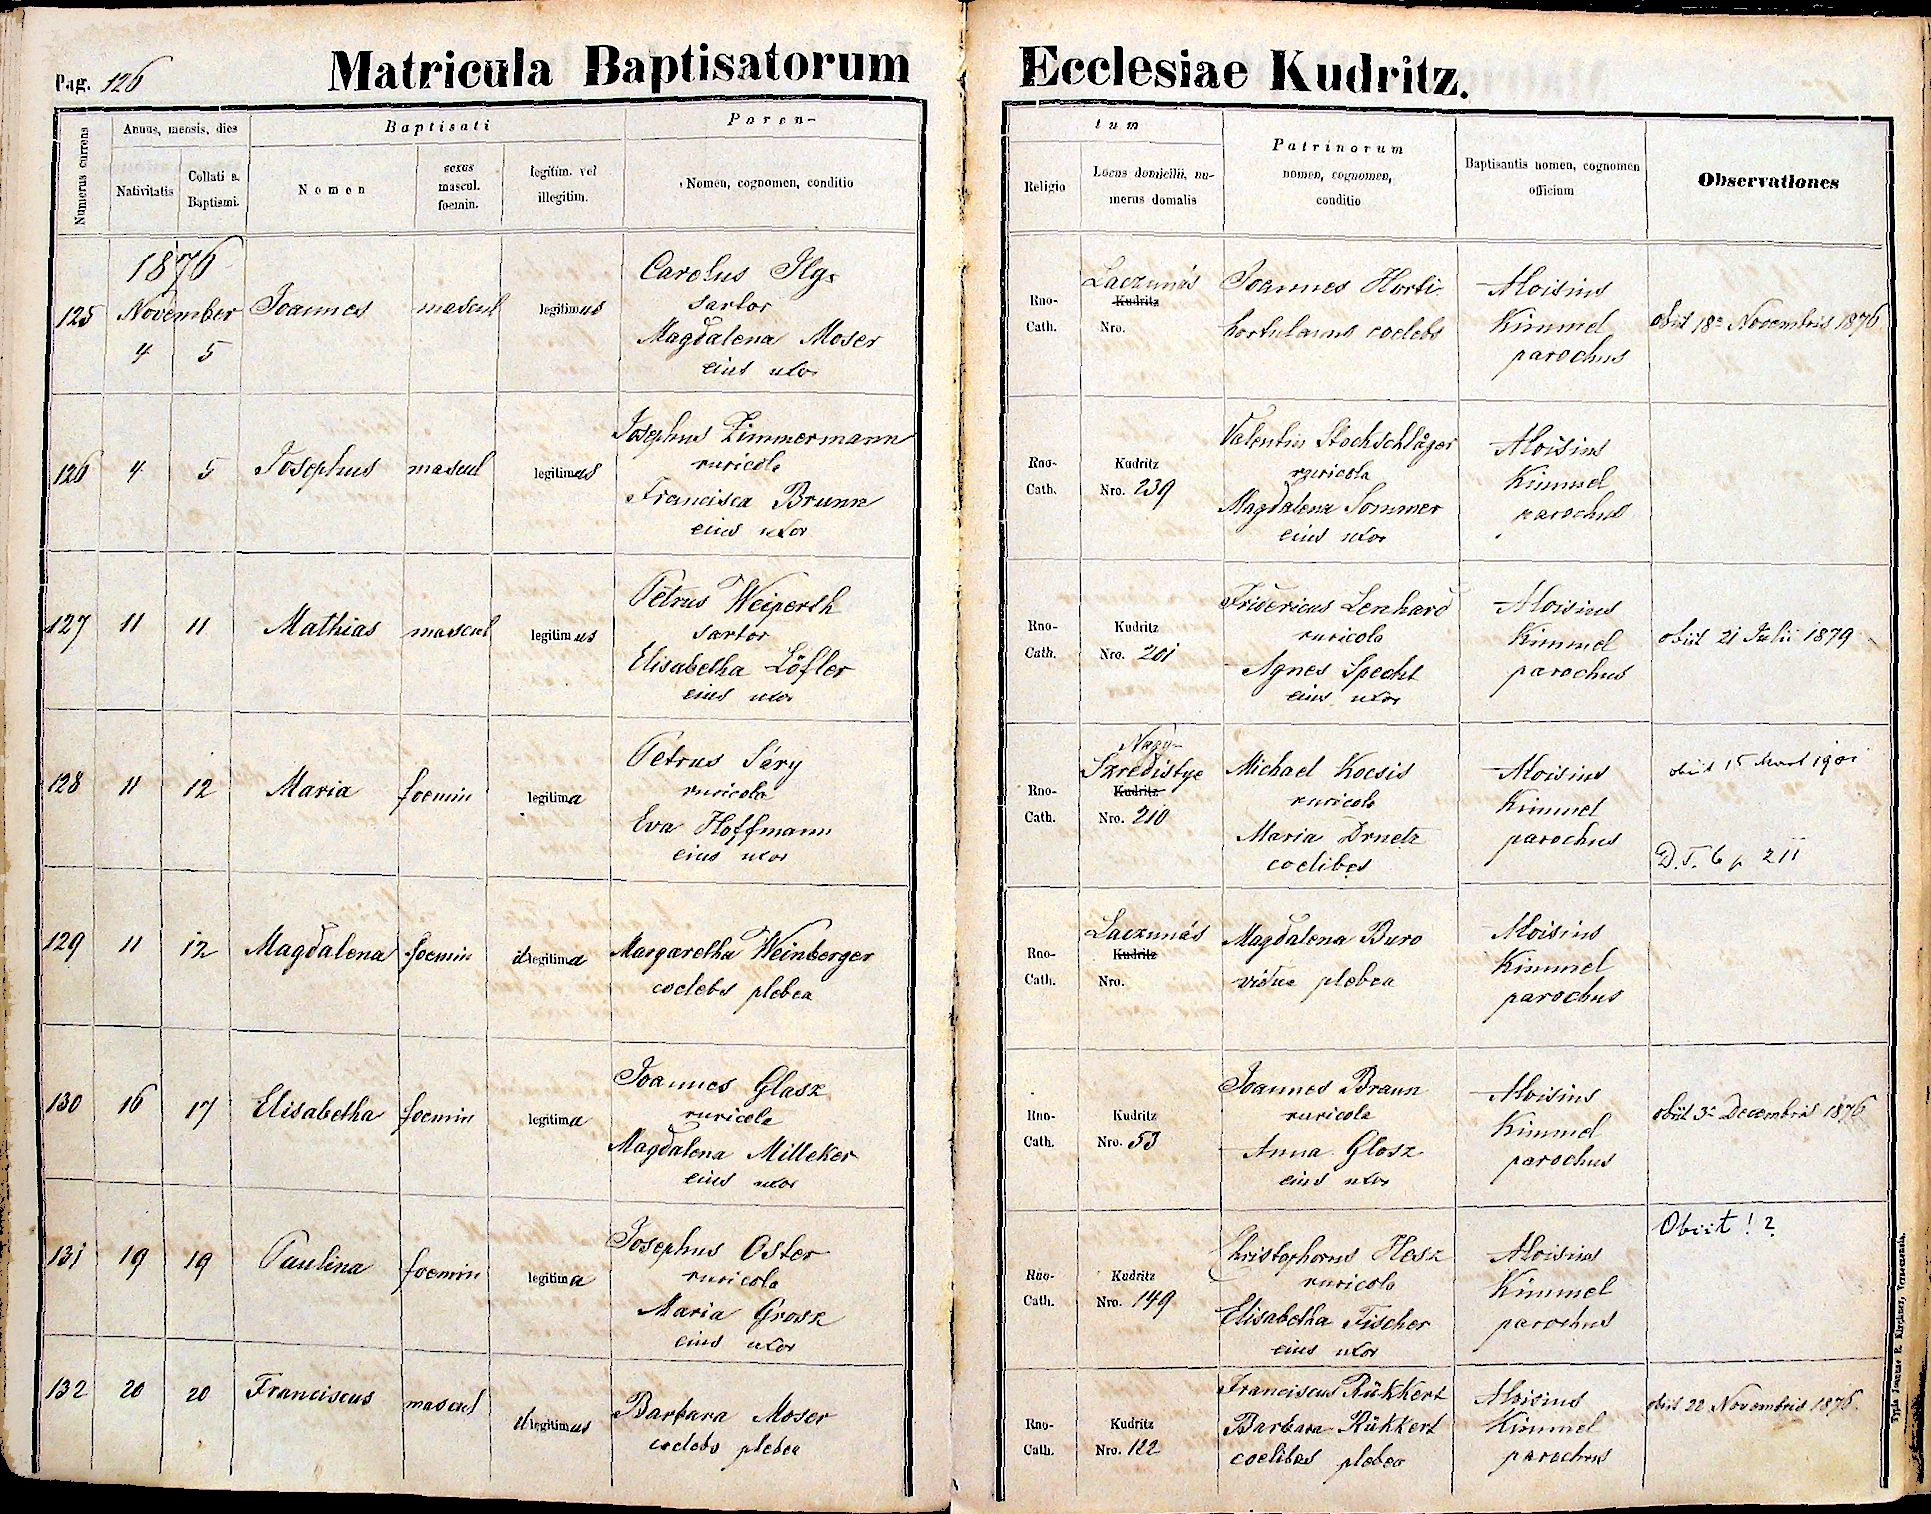 images/church_records/BIRTHS/1870-1879B/1876/126